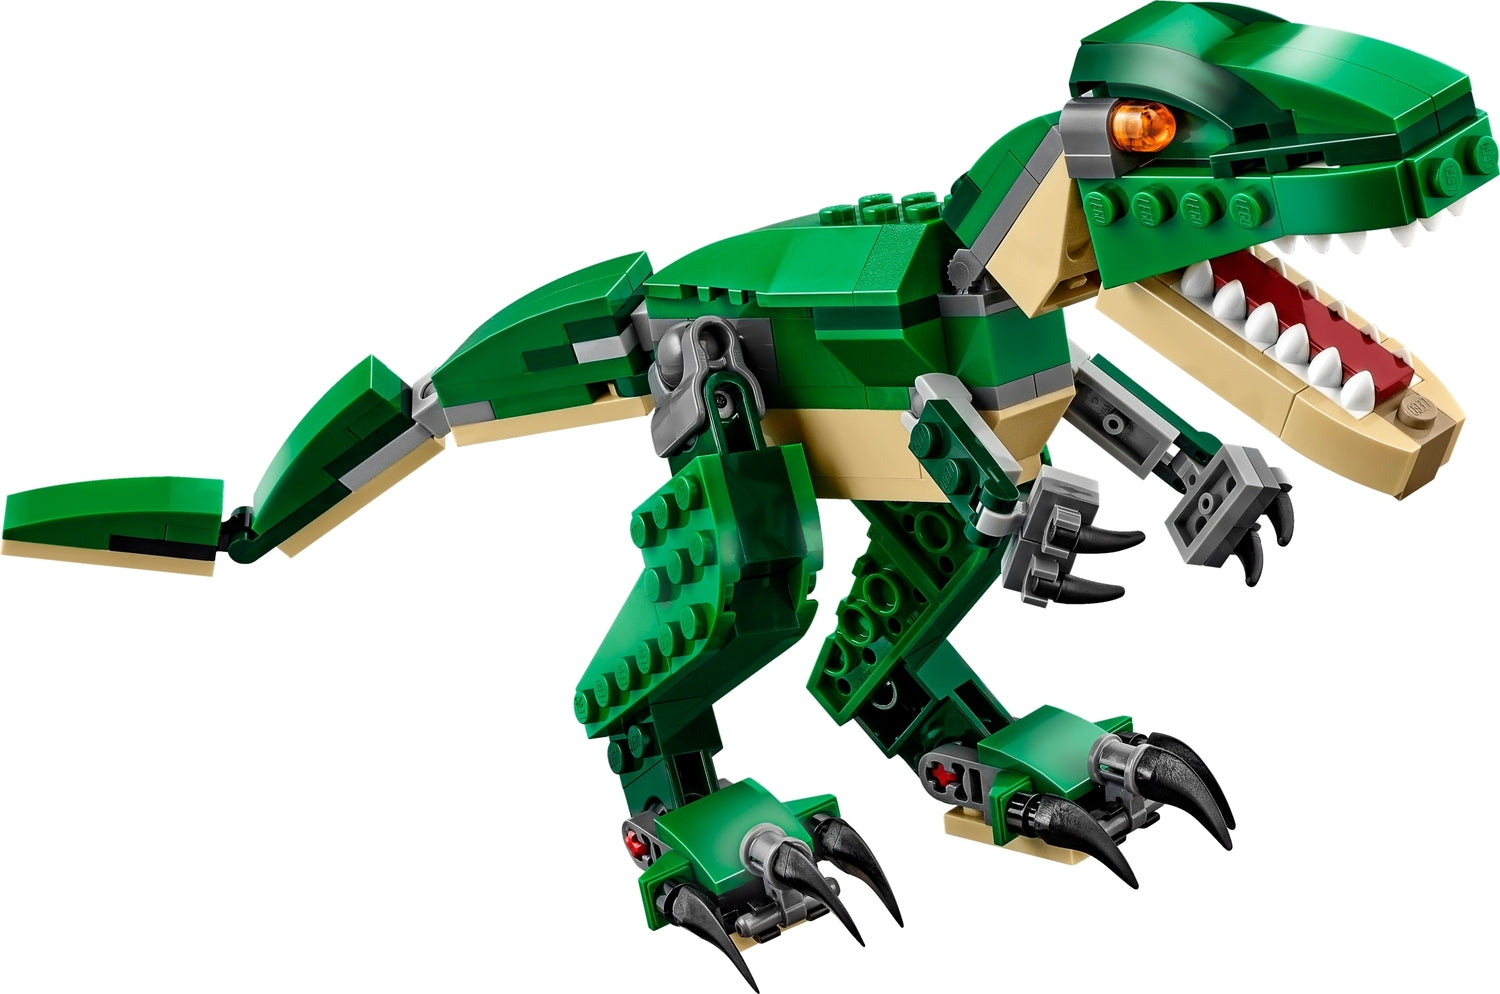 LEGO® Creator Mighty Dinosaurs